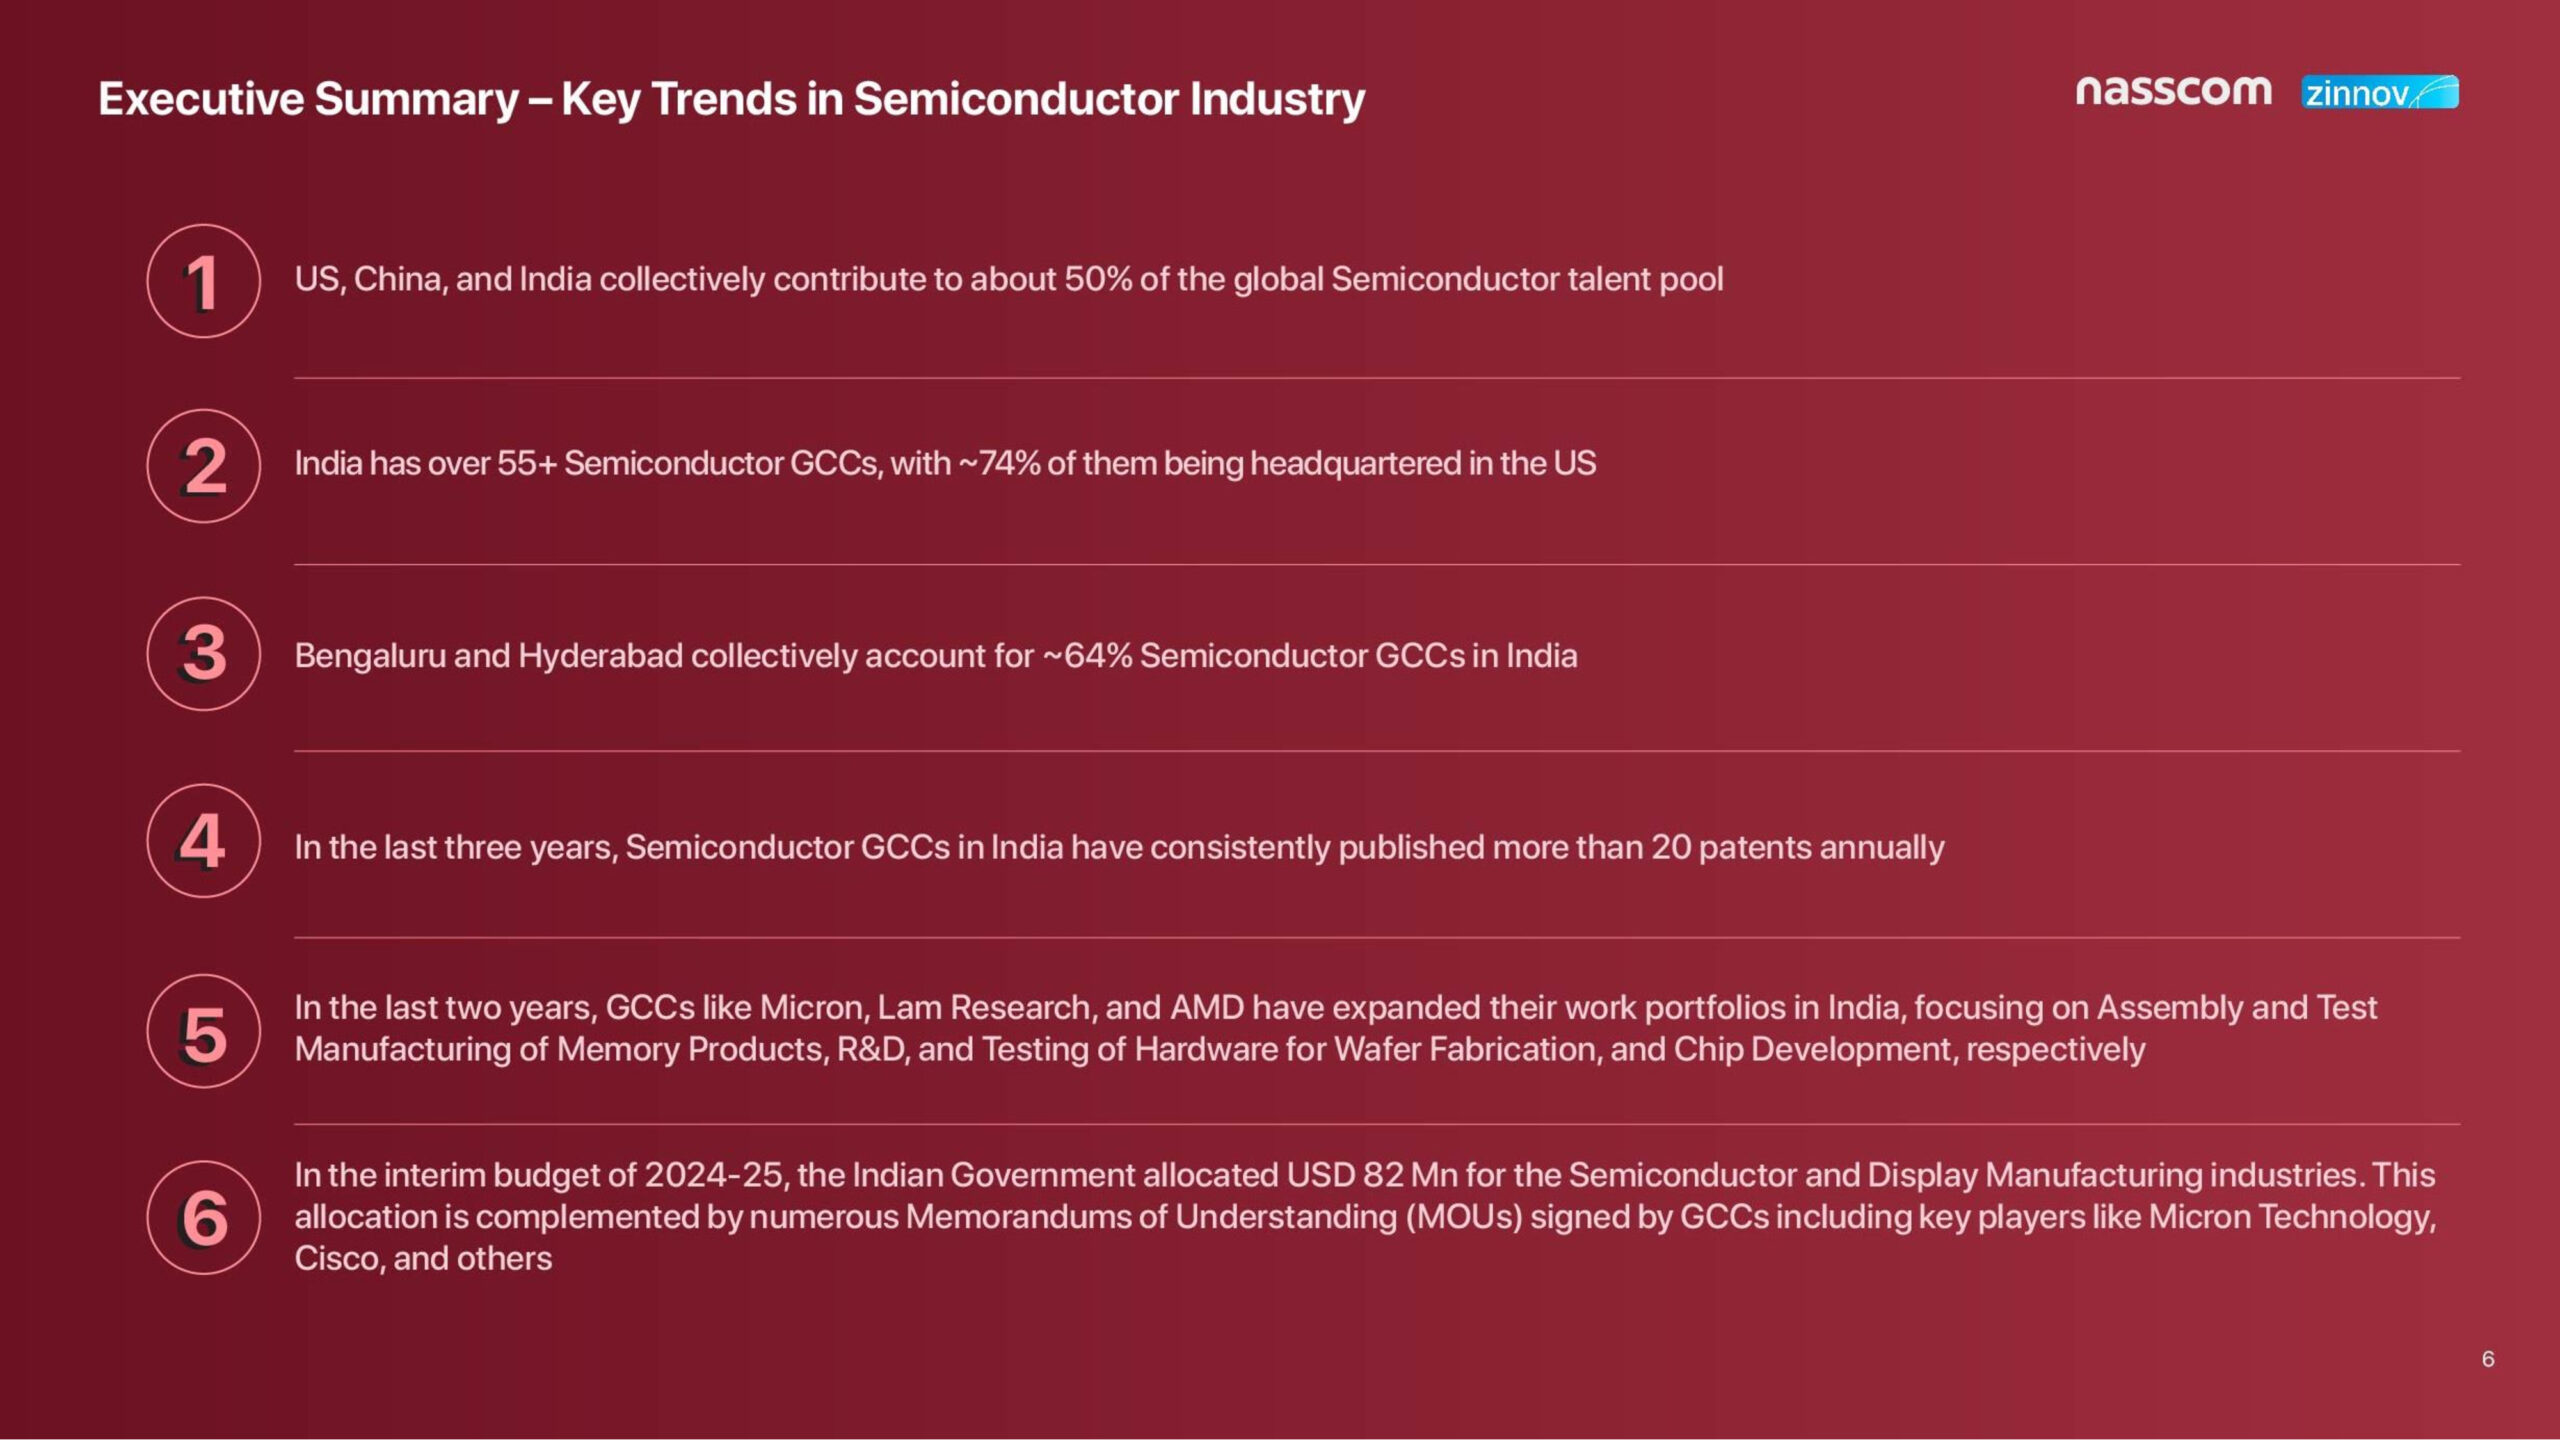 Zinnov Nasscom India Gcc Trends Q4cy20236 Scaled